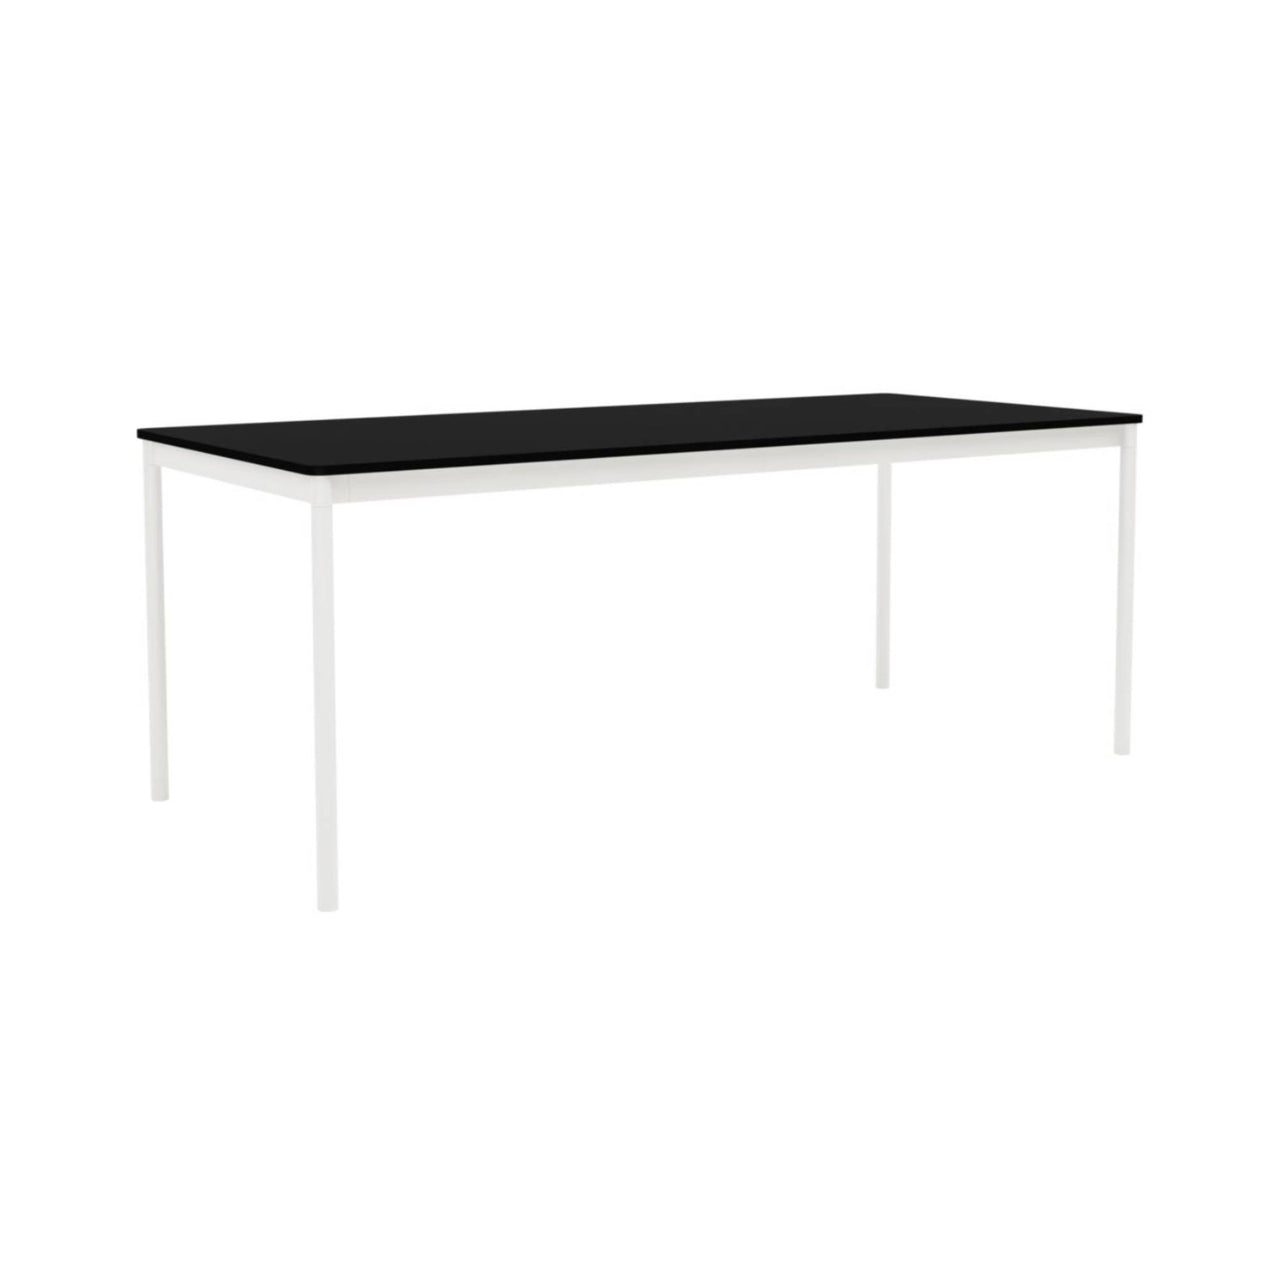 Base Table: Medium + Black Laminate + ABS Edge + White